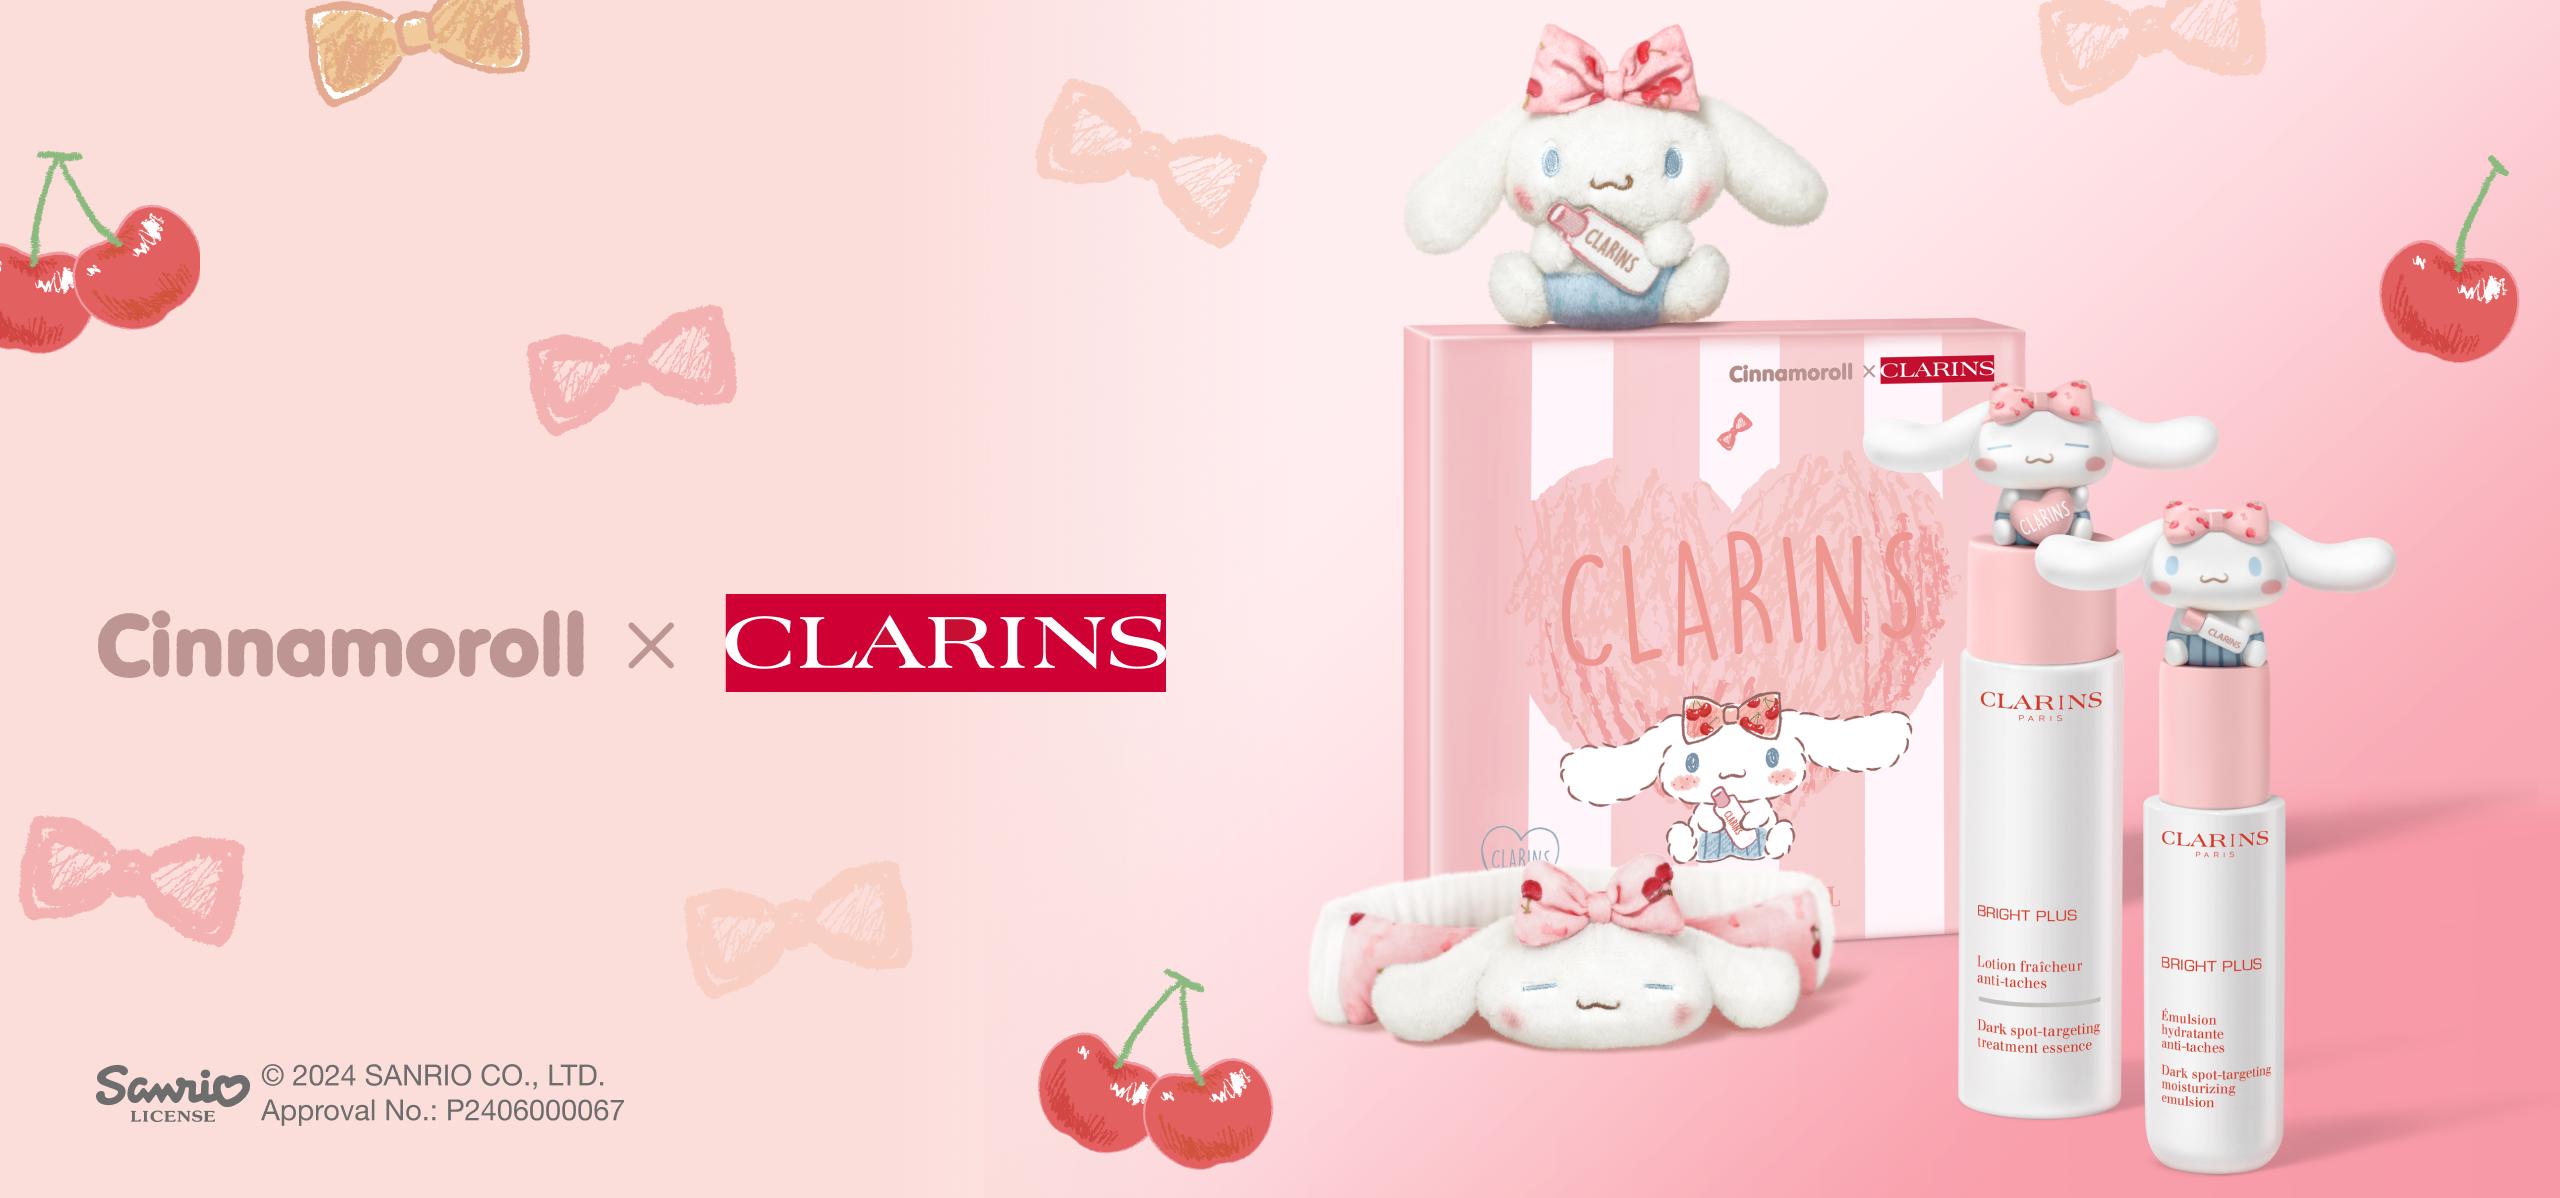 Clarins x Cinnamoroll 透亮光感淡斑 限定套裝